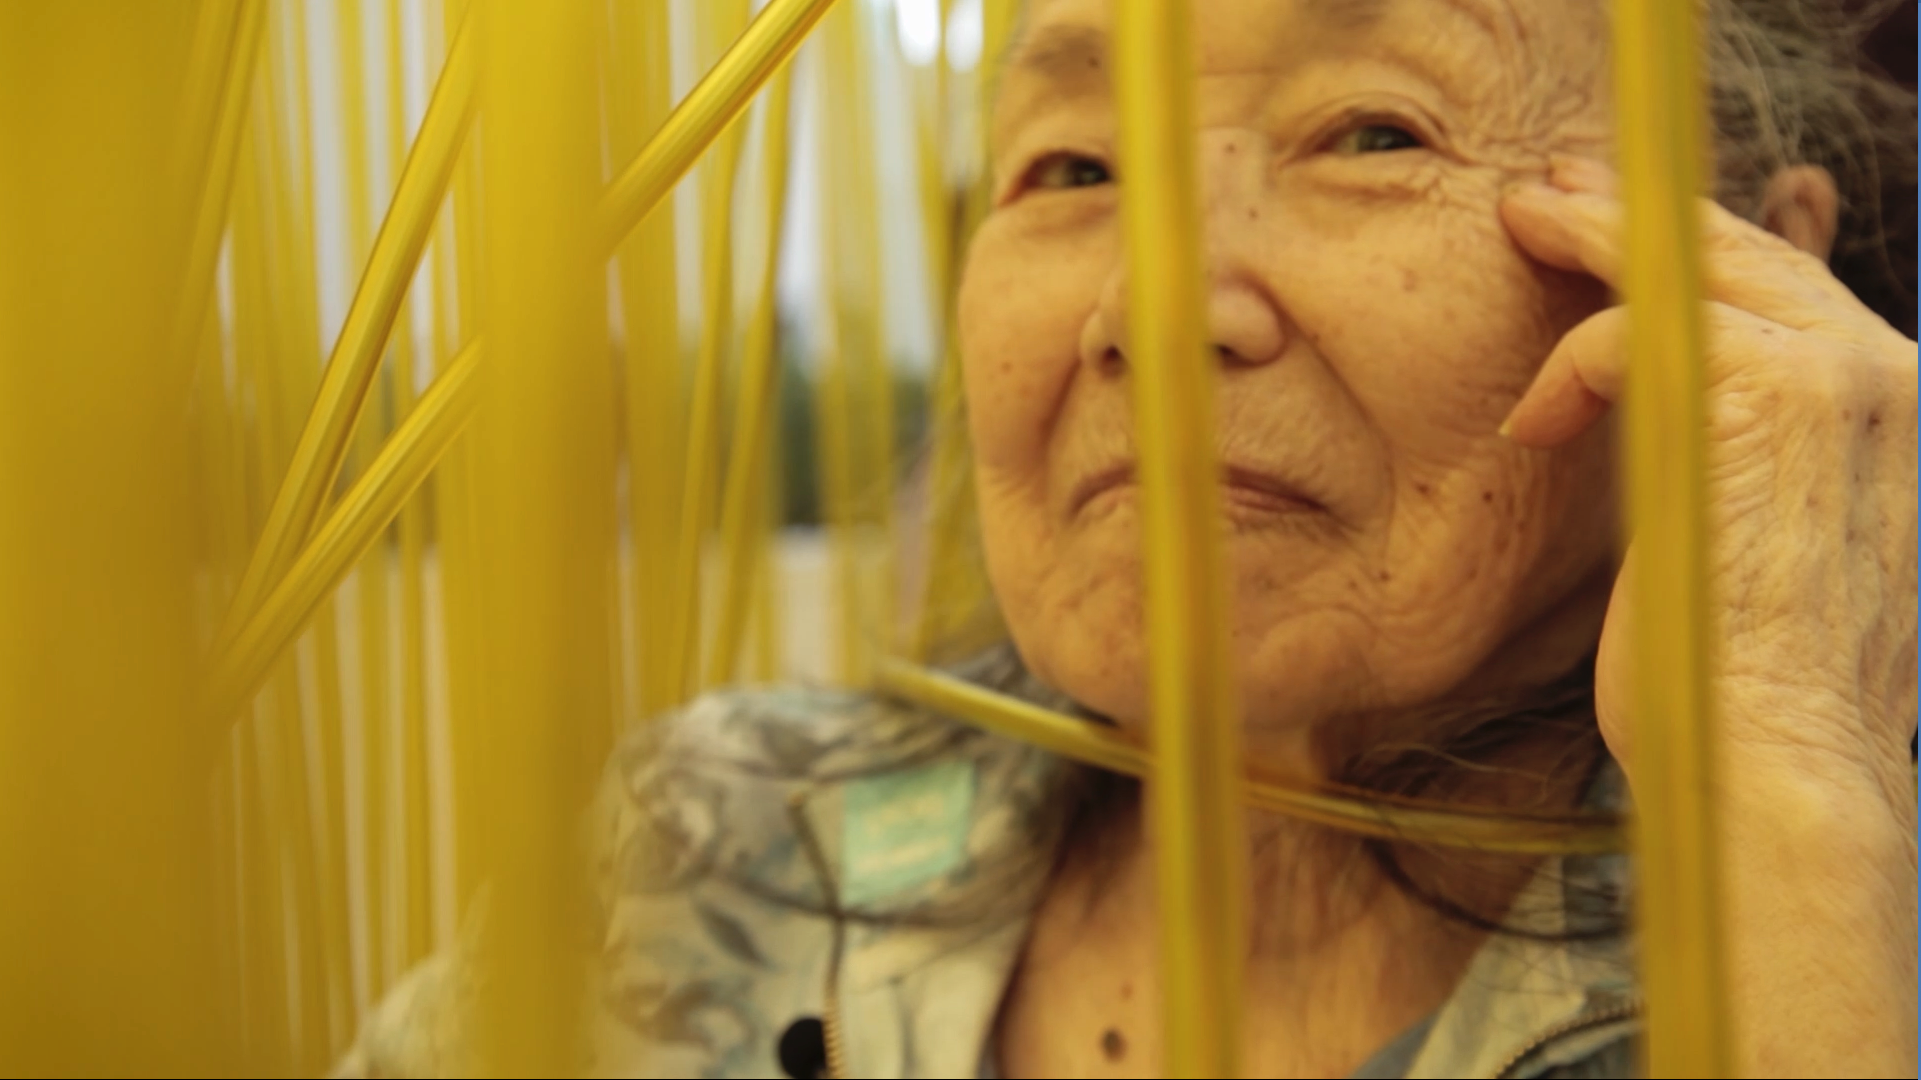 Rose Tajiri, an elderly Asian woman, poses amid an art installation comprised of long yellow strands. From Rea Tajiri's “Wisdom Gone Wild”. Photo courtesy of IDFA